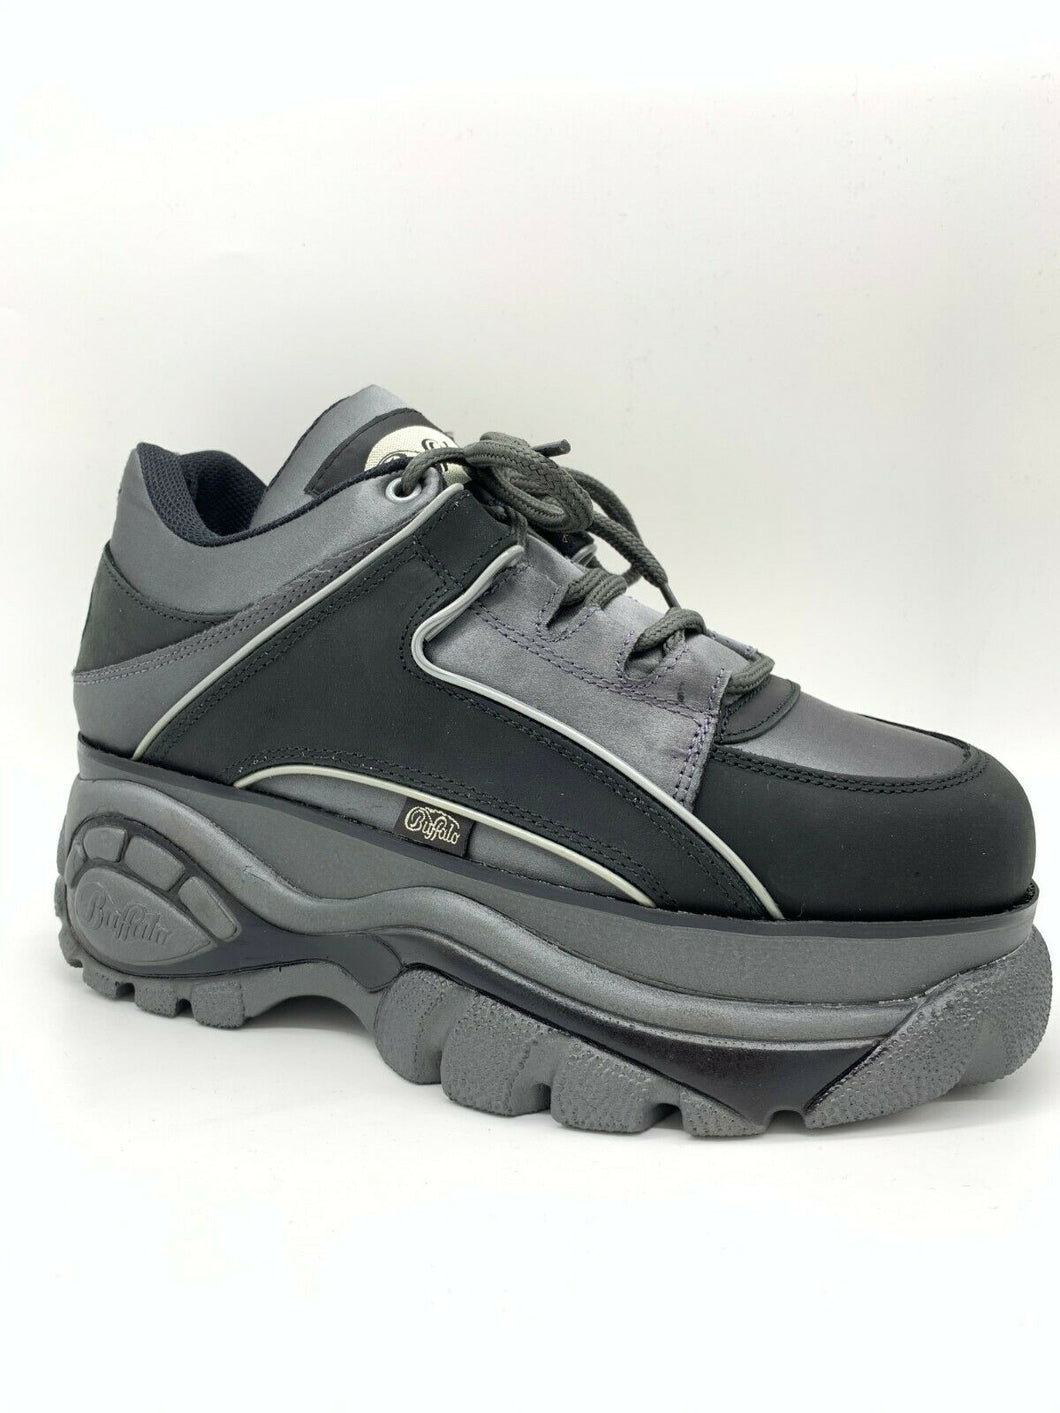 Buffalo Classic Boots Shoes Plateau Schuhe 90er Space Grey 1339-14